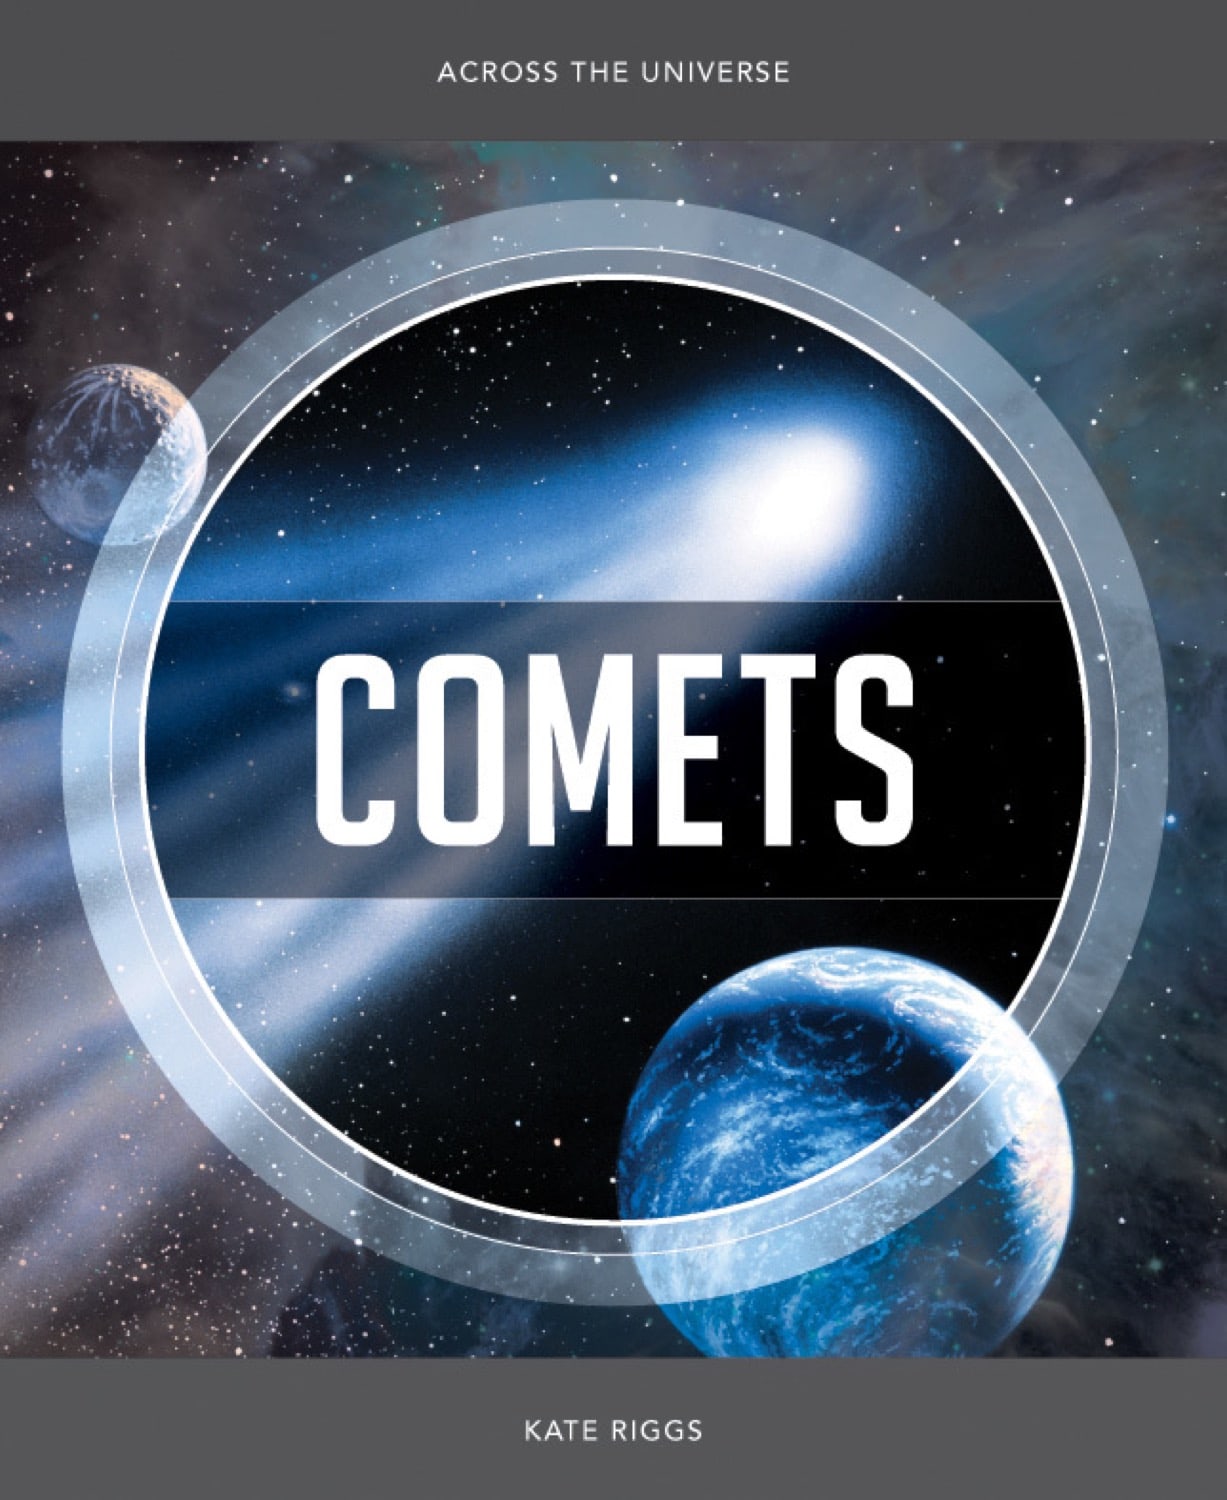 Im ganzen Universum: Kometen